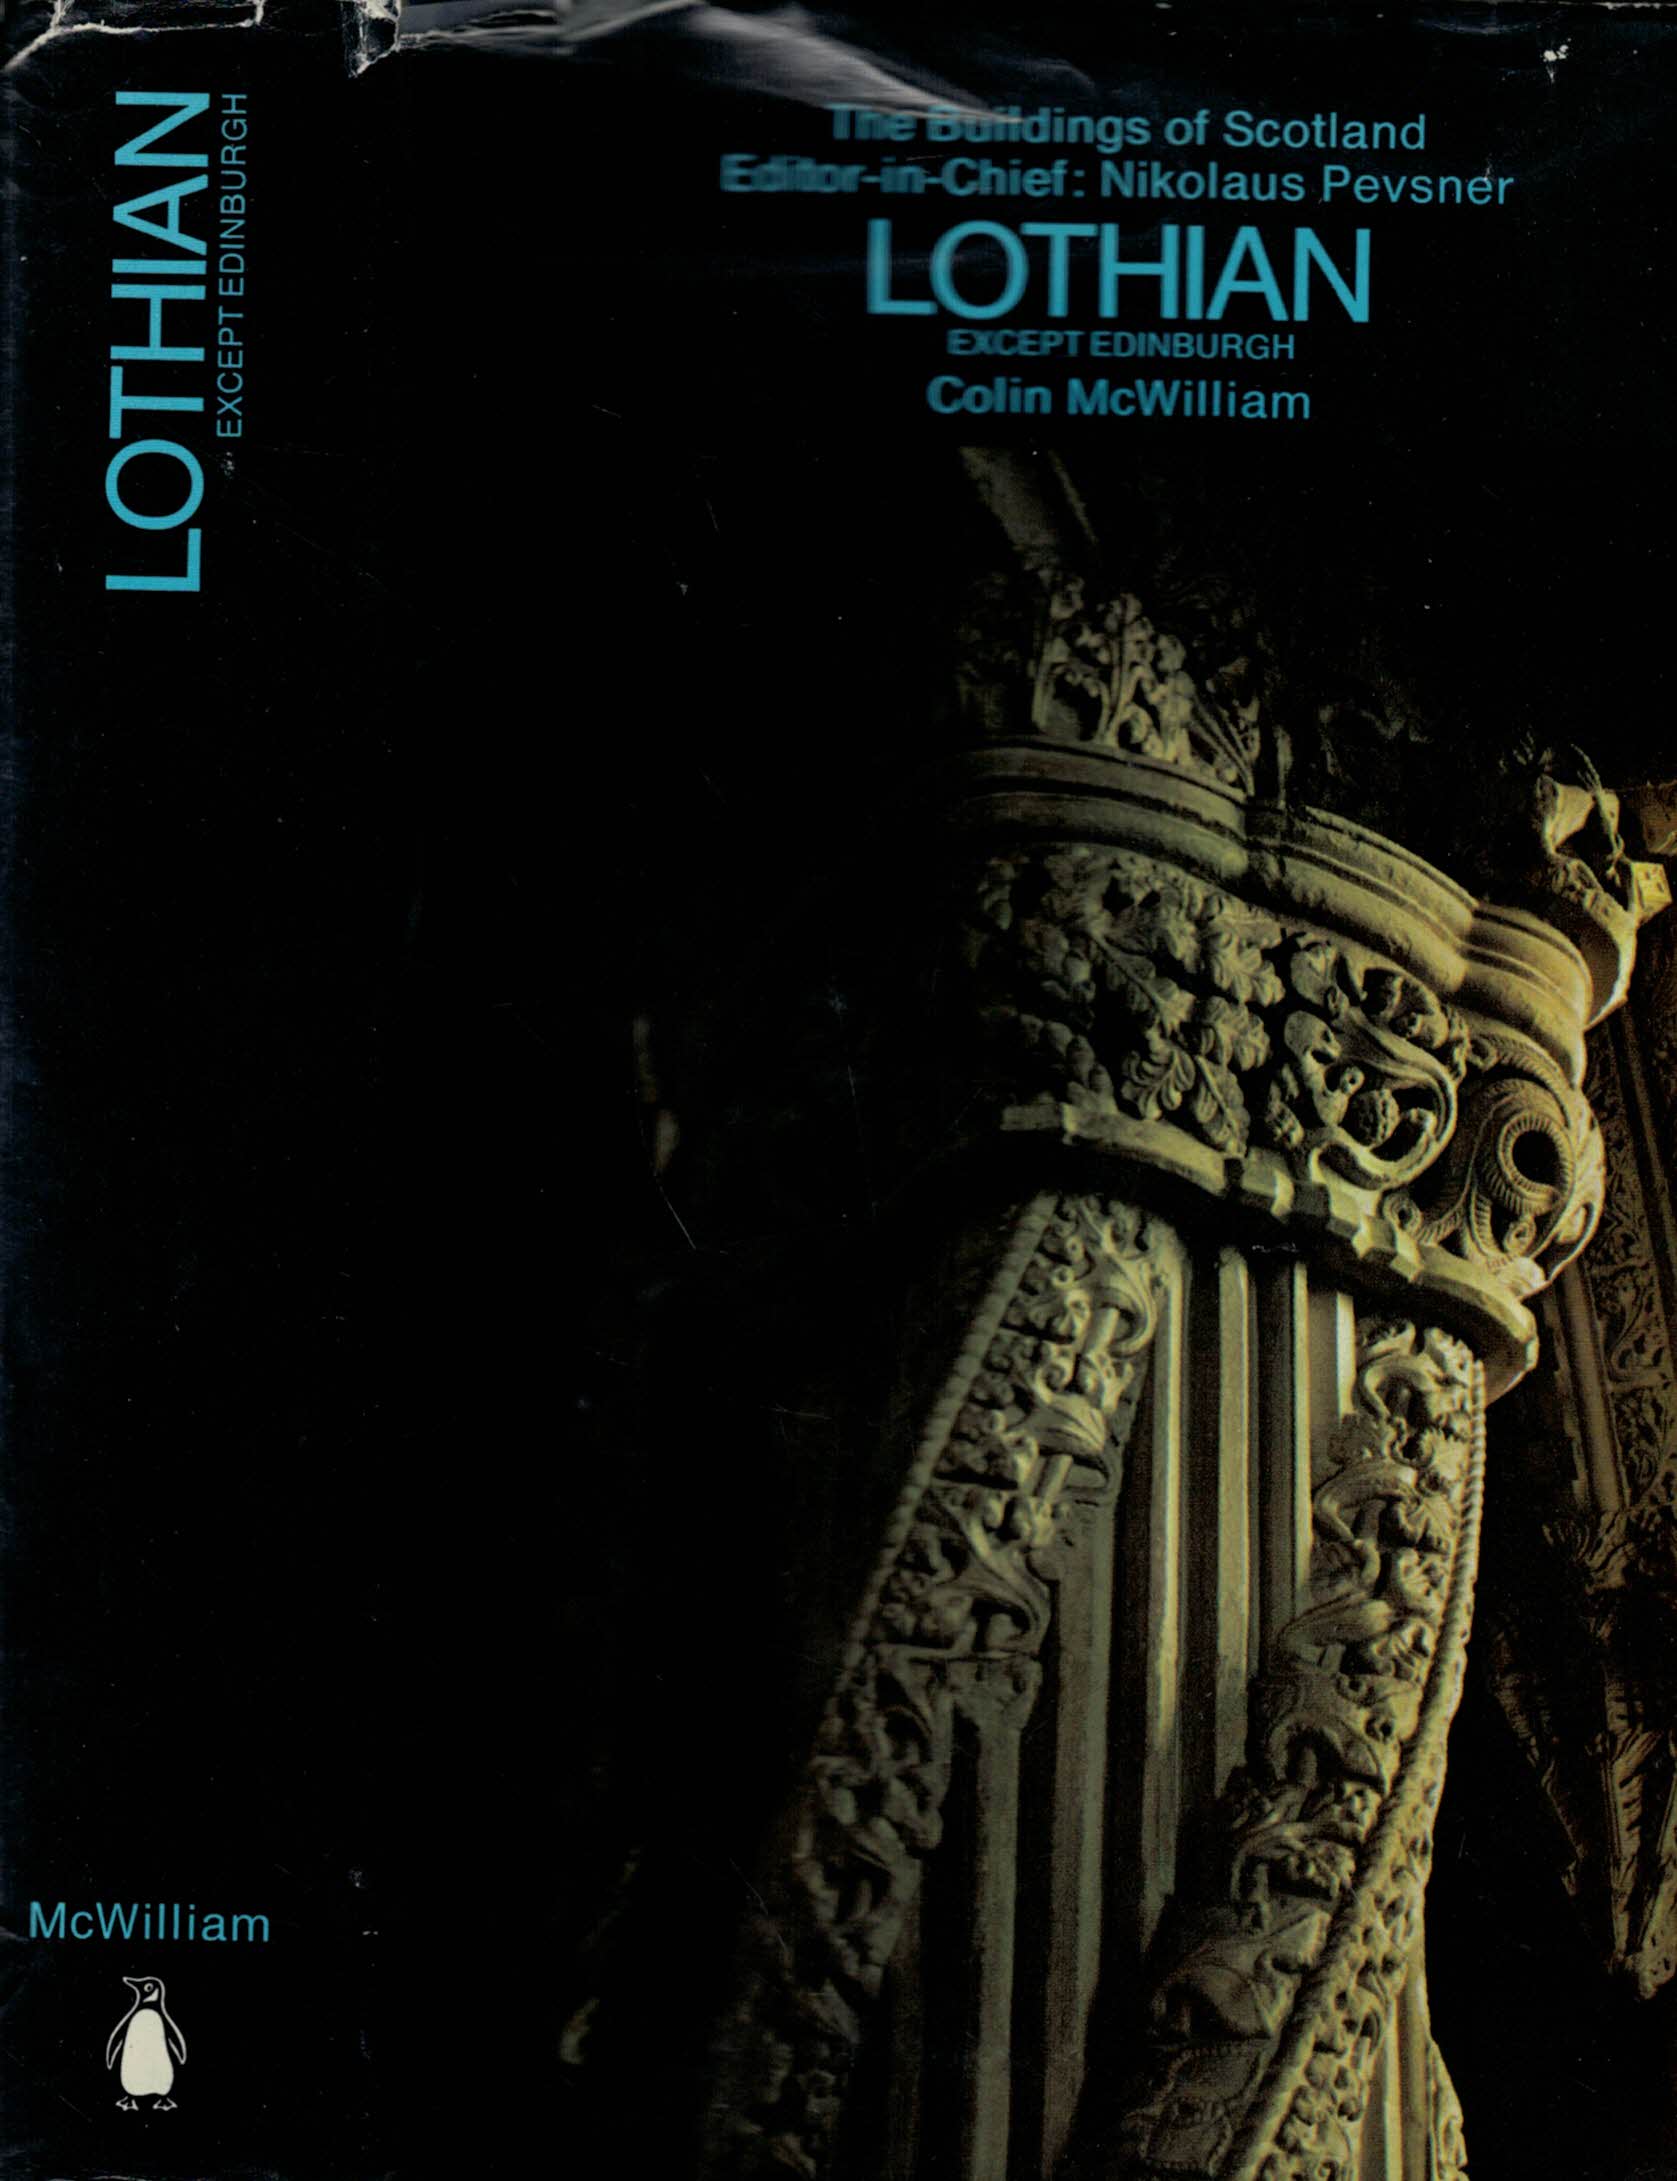 Lothian. Except Edinburgh. The Buildings of Scotland. 1978.